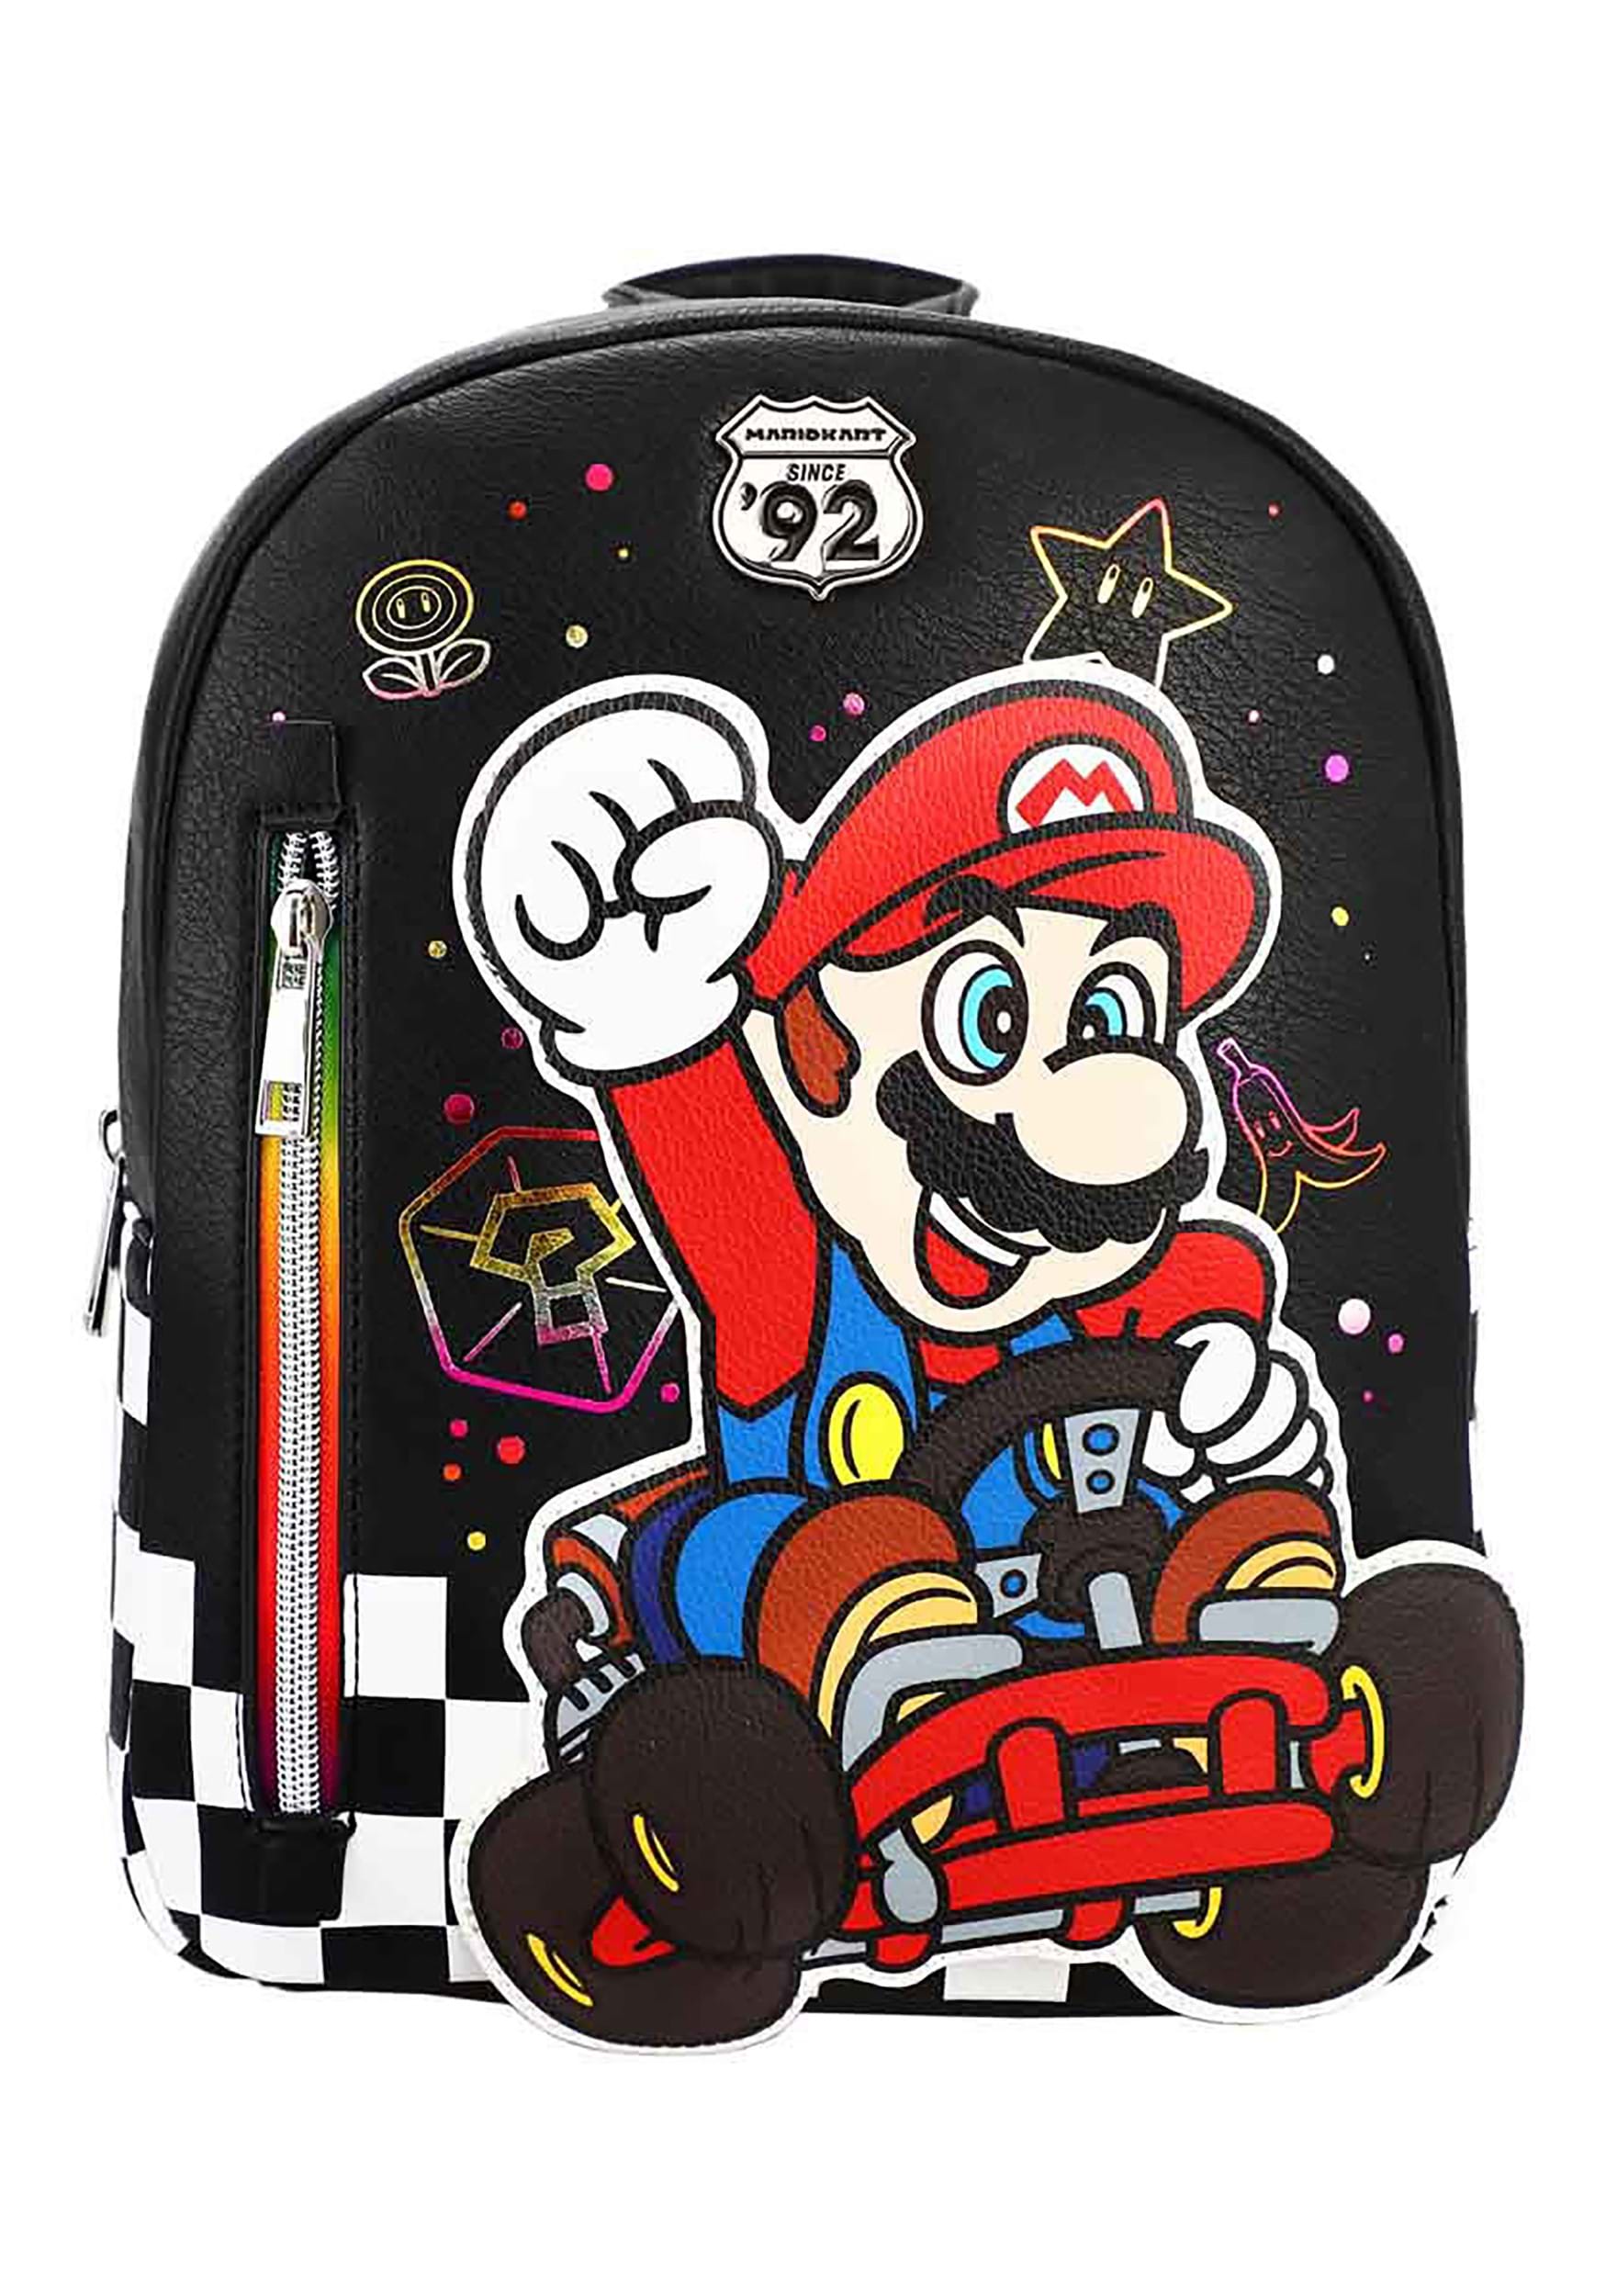 Rainbow Road Mario Kart Mini Backpack